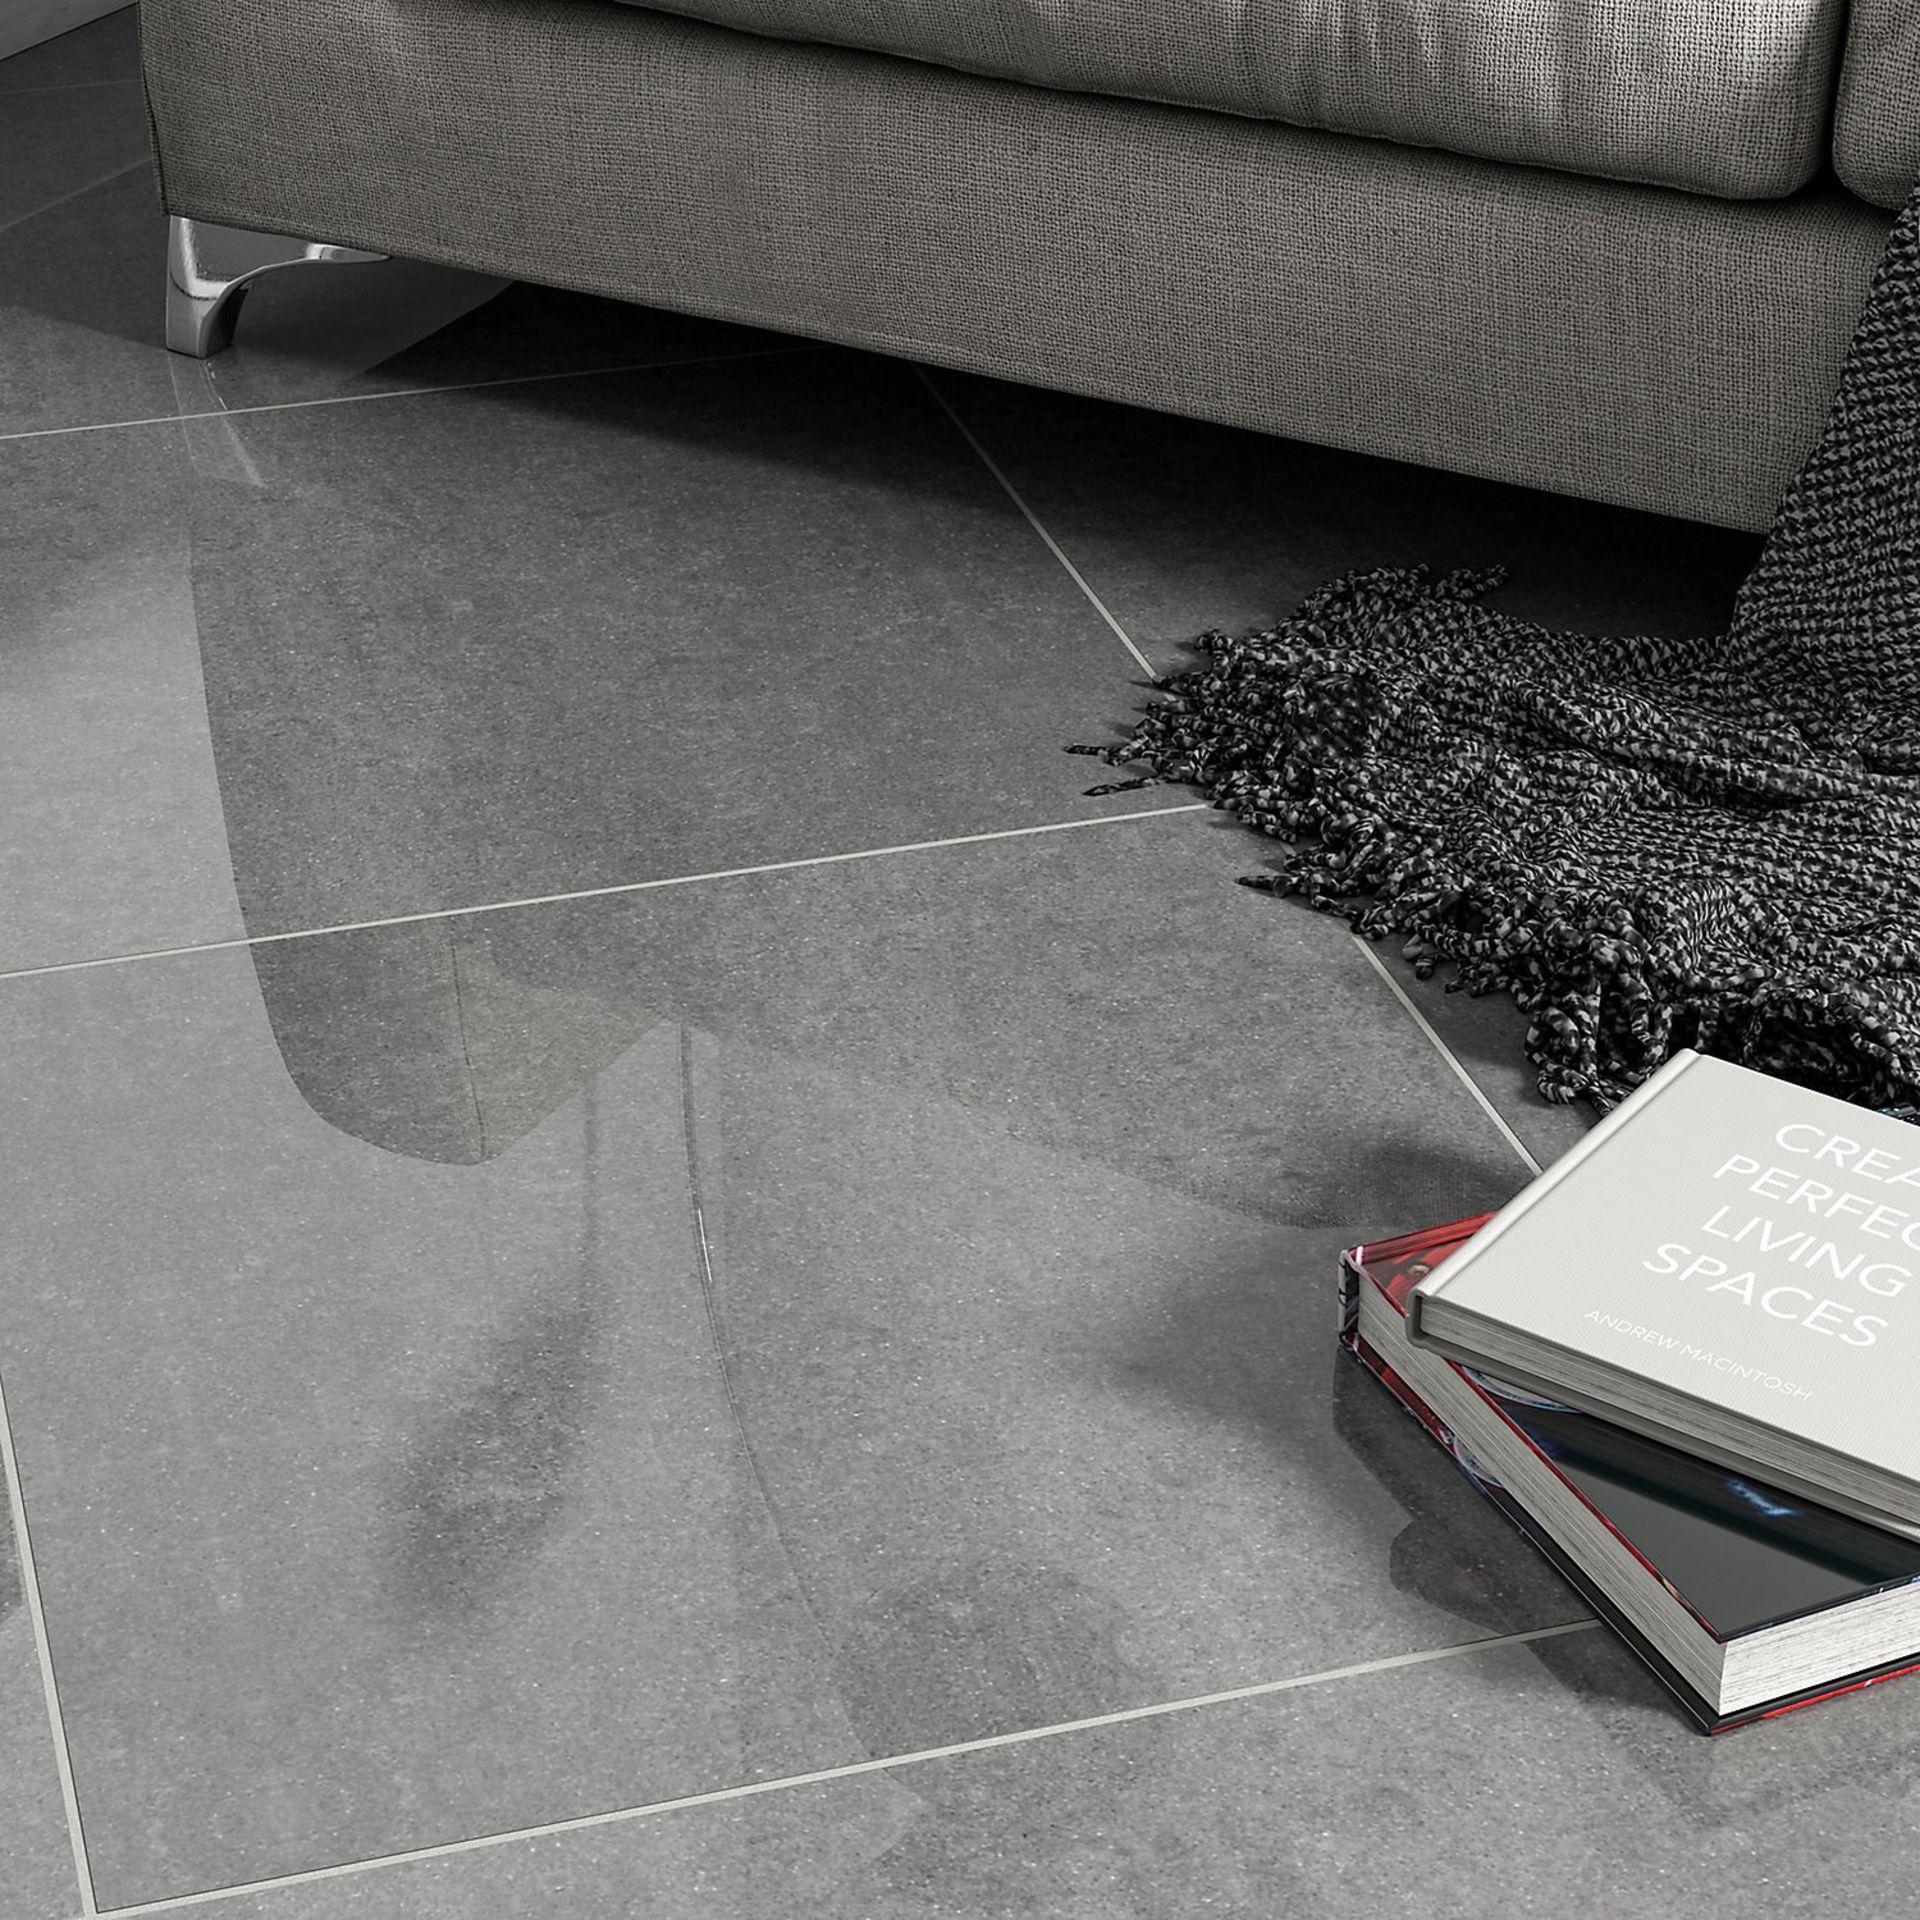 (RR5) 7m2 x Anthracite Luxury Glazed Porcelain Floor tile. 600x600x9.2mm. RRP £490. (£70 per ... (